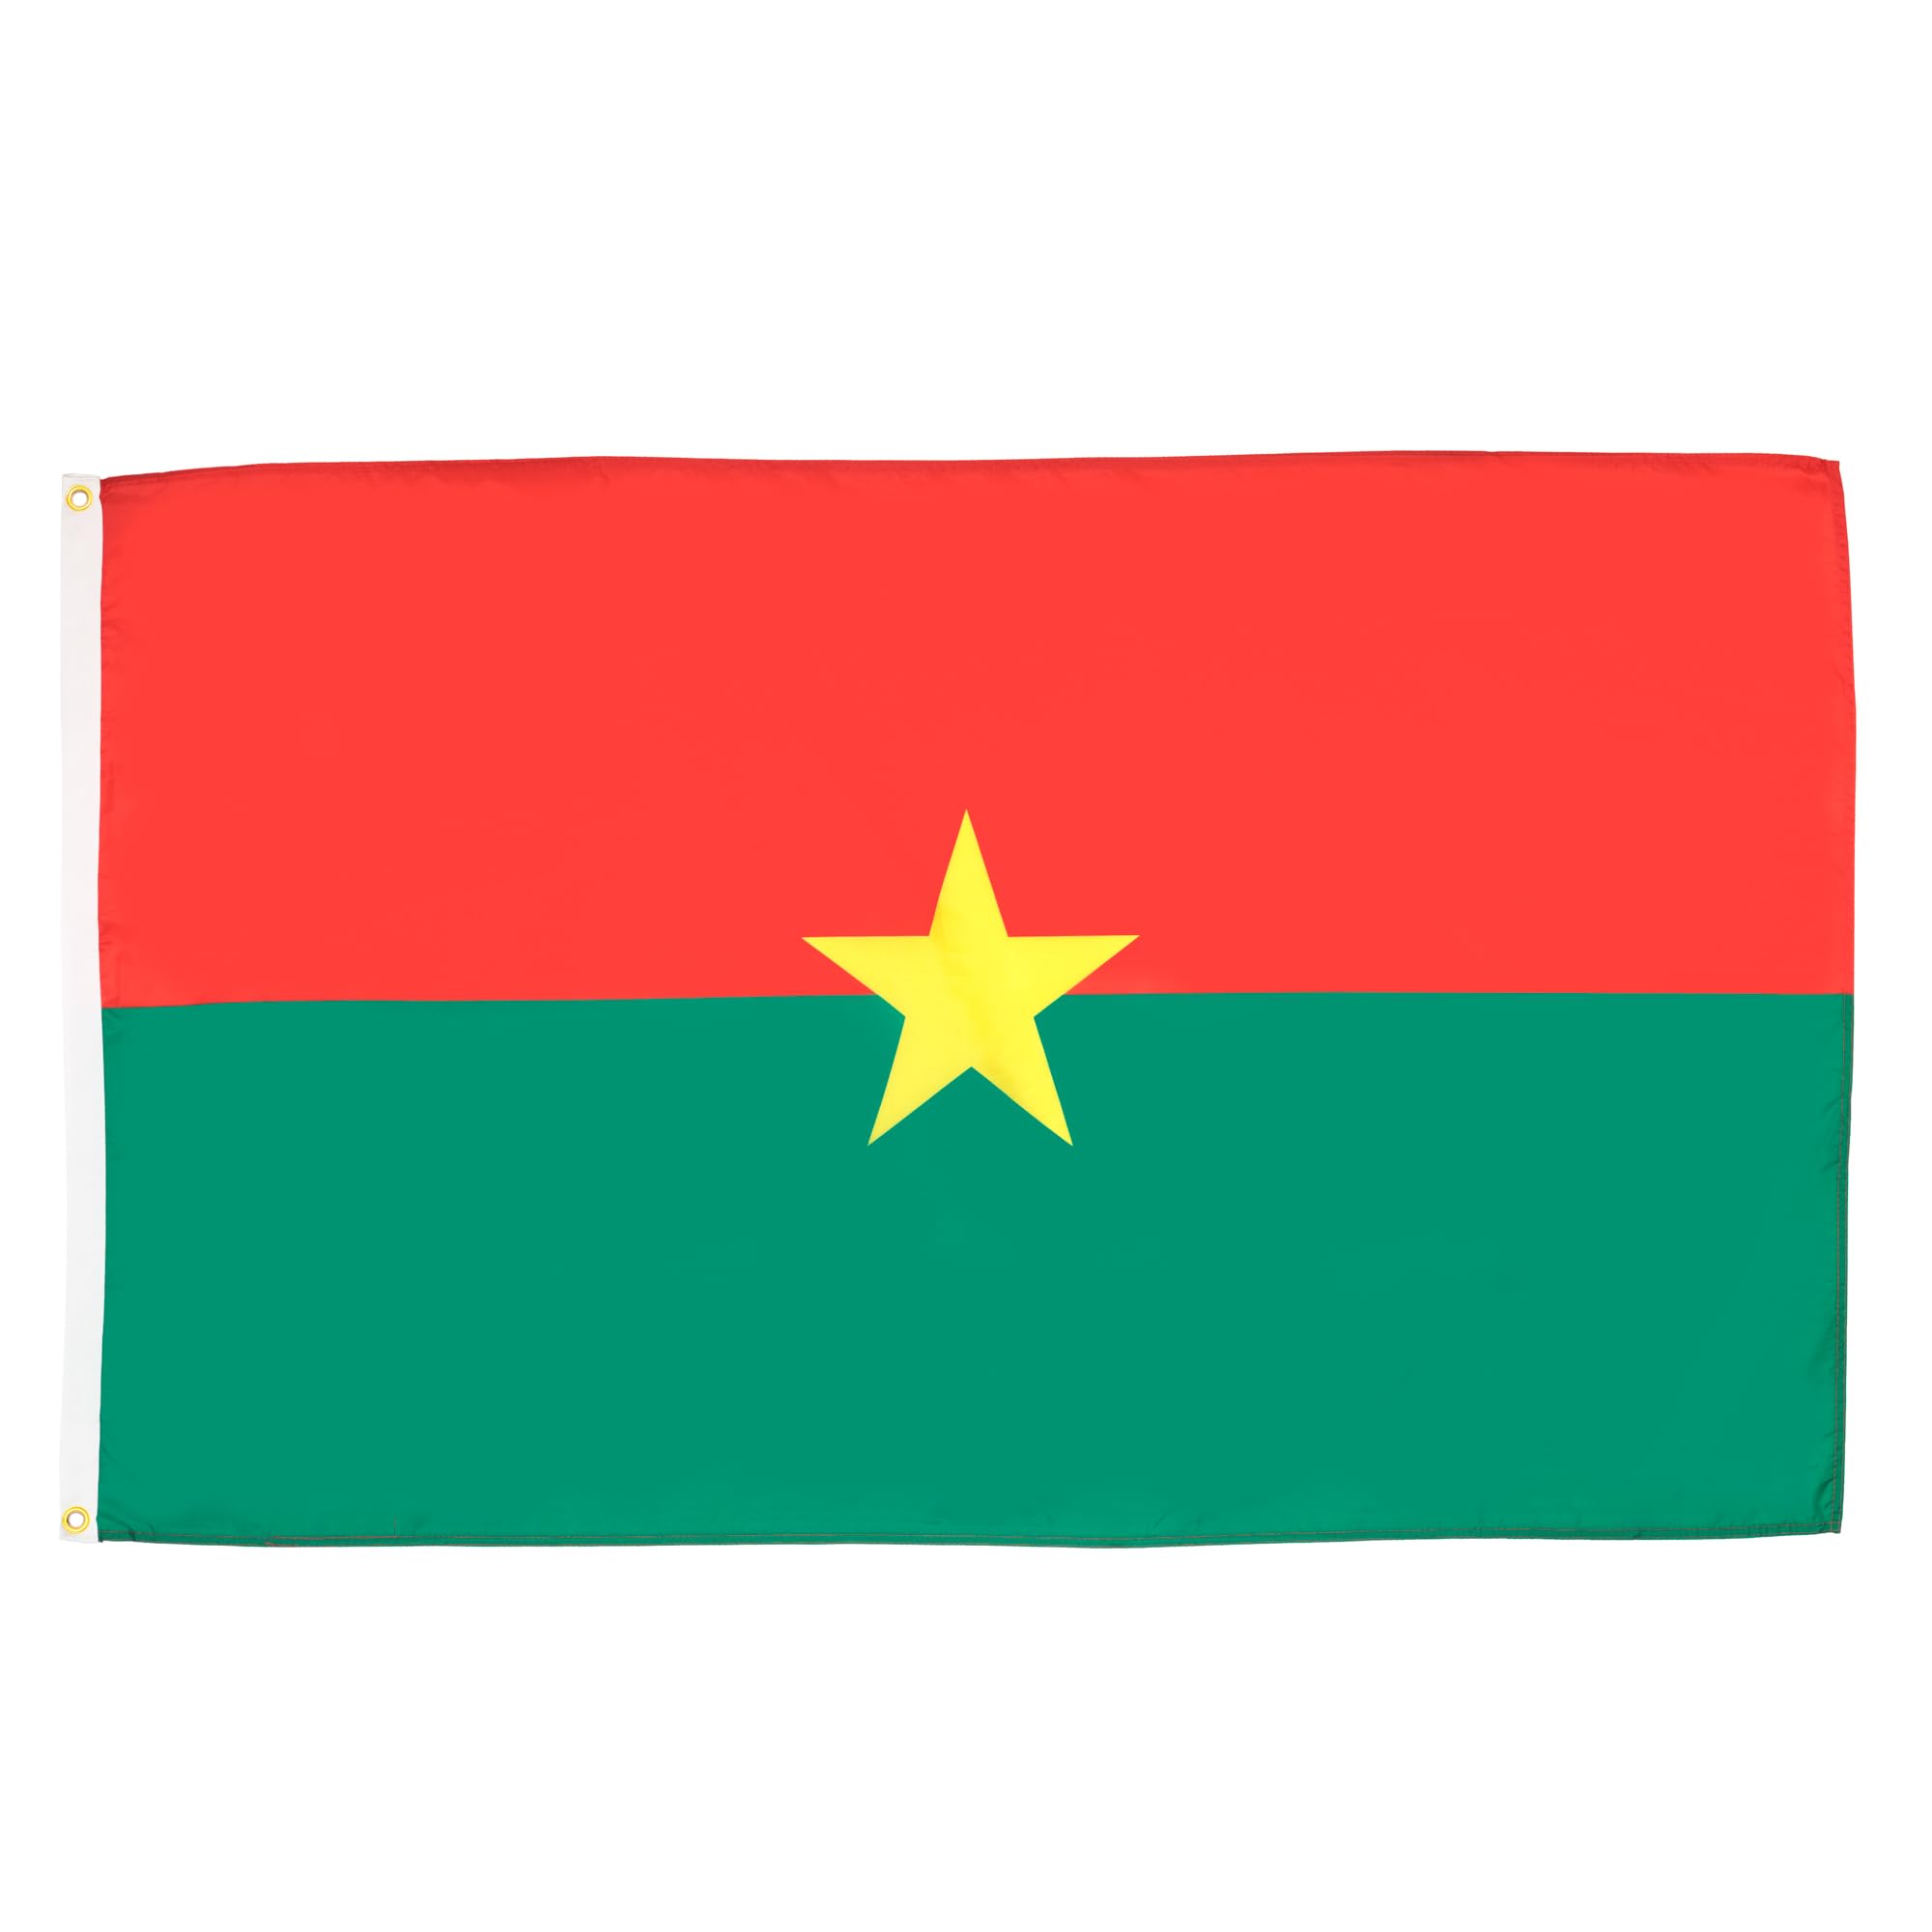 en ligne AZ FLAG - Drapeau Burkina Faso - 150x90 cm - Drapeau Burkinabais 100% Polyester avec Oeillets Métalliques Intégrés - Pavillon 110 g sLVb6TeJS en France Online